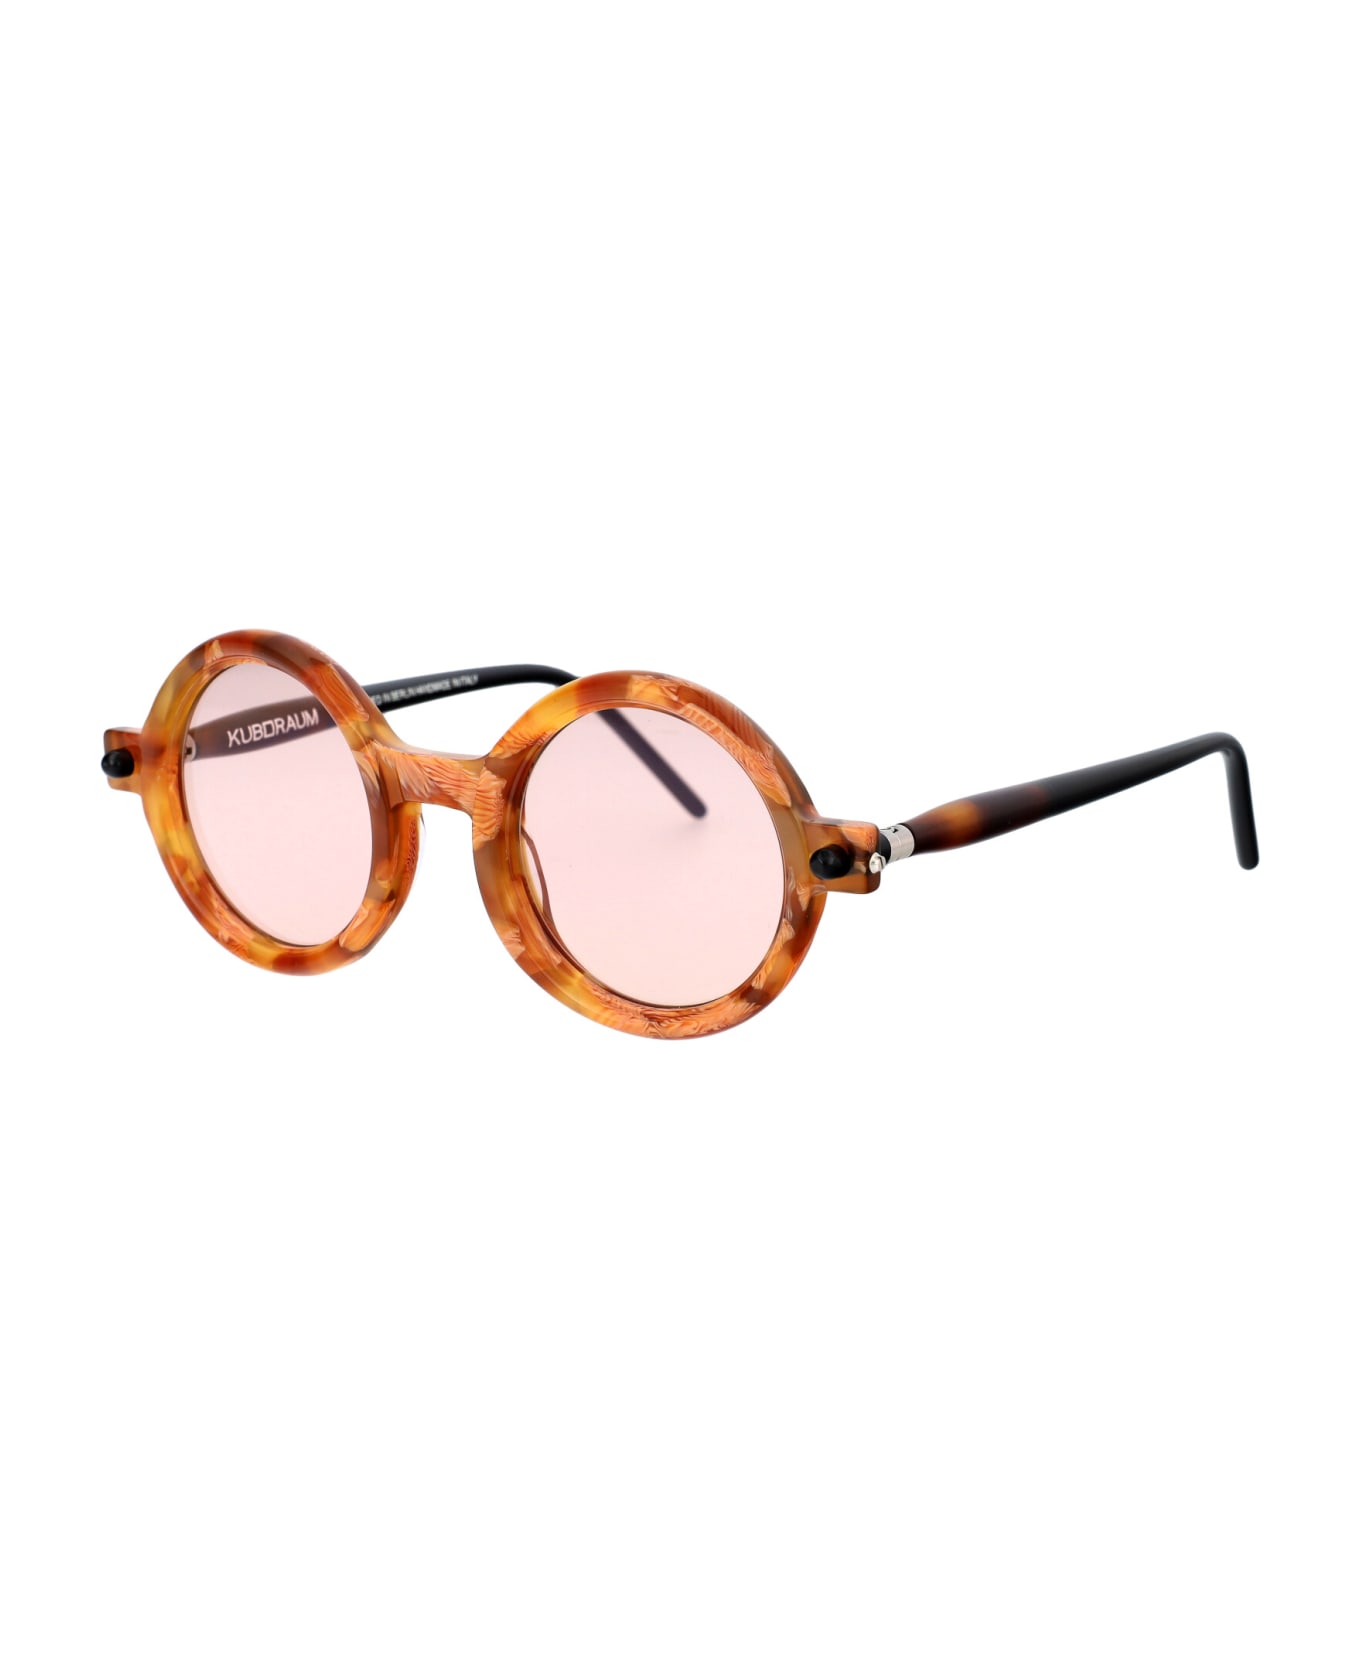 Kuboraum Maske P1 Sunglasses - APA pink1* サングラス